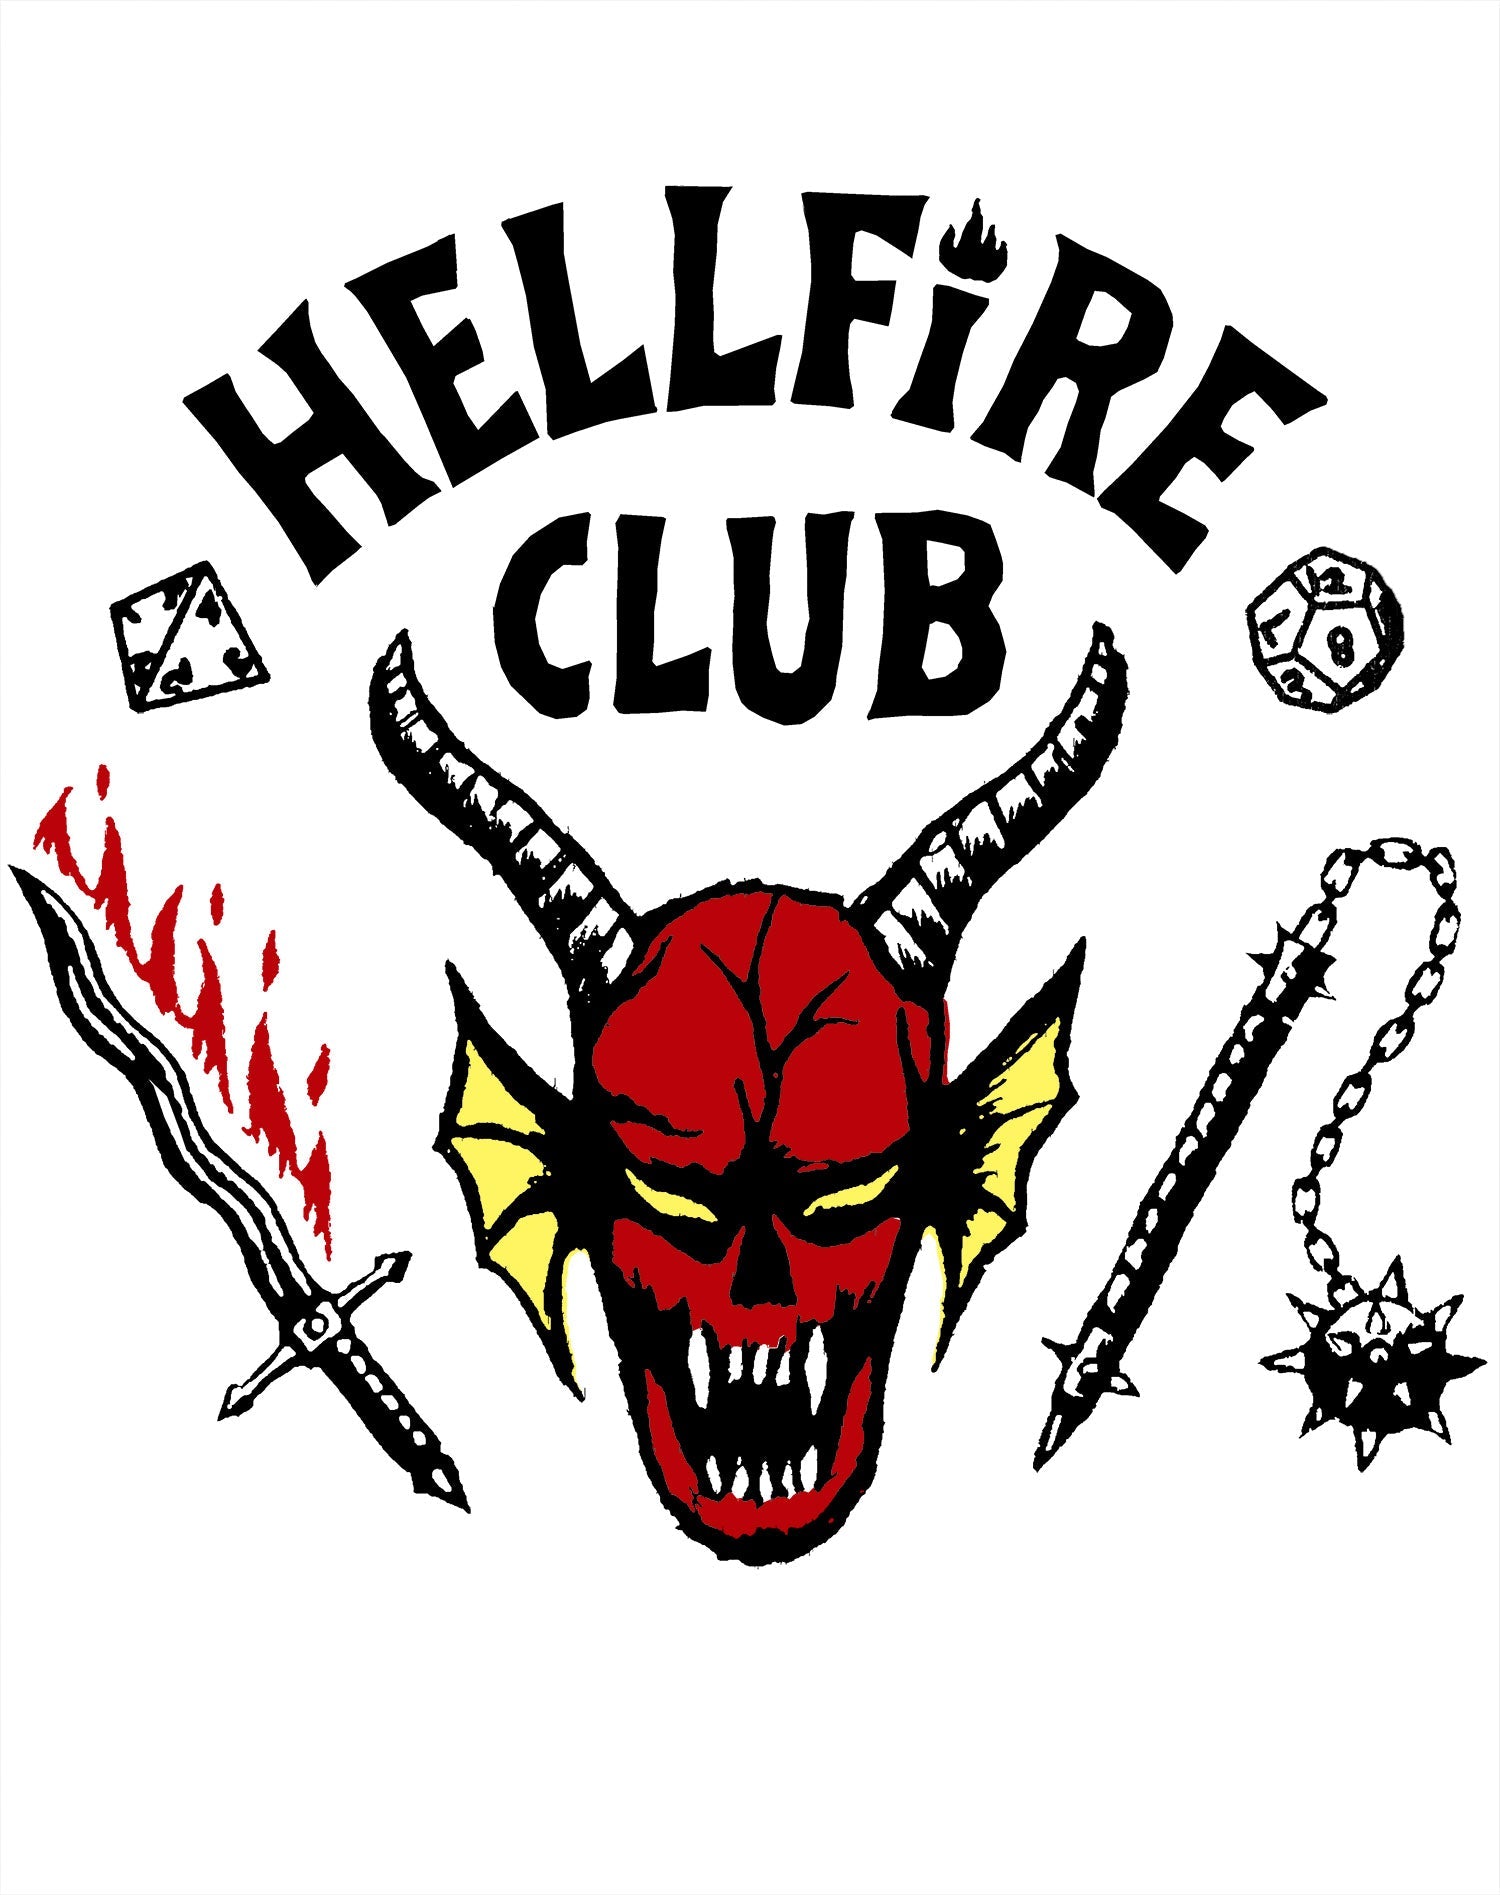 Stranger Things Logo Hellfire Club Classic Women's T-Shirt